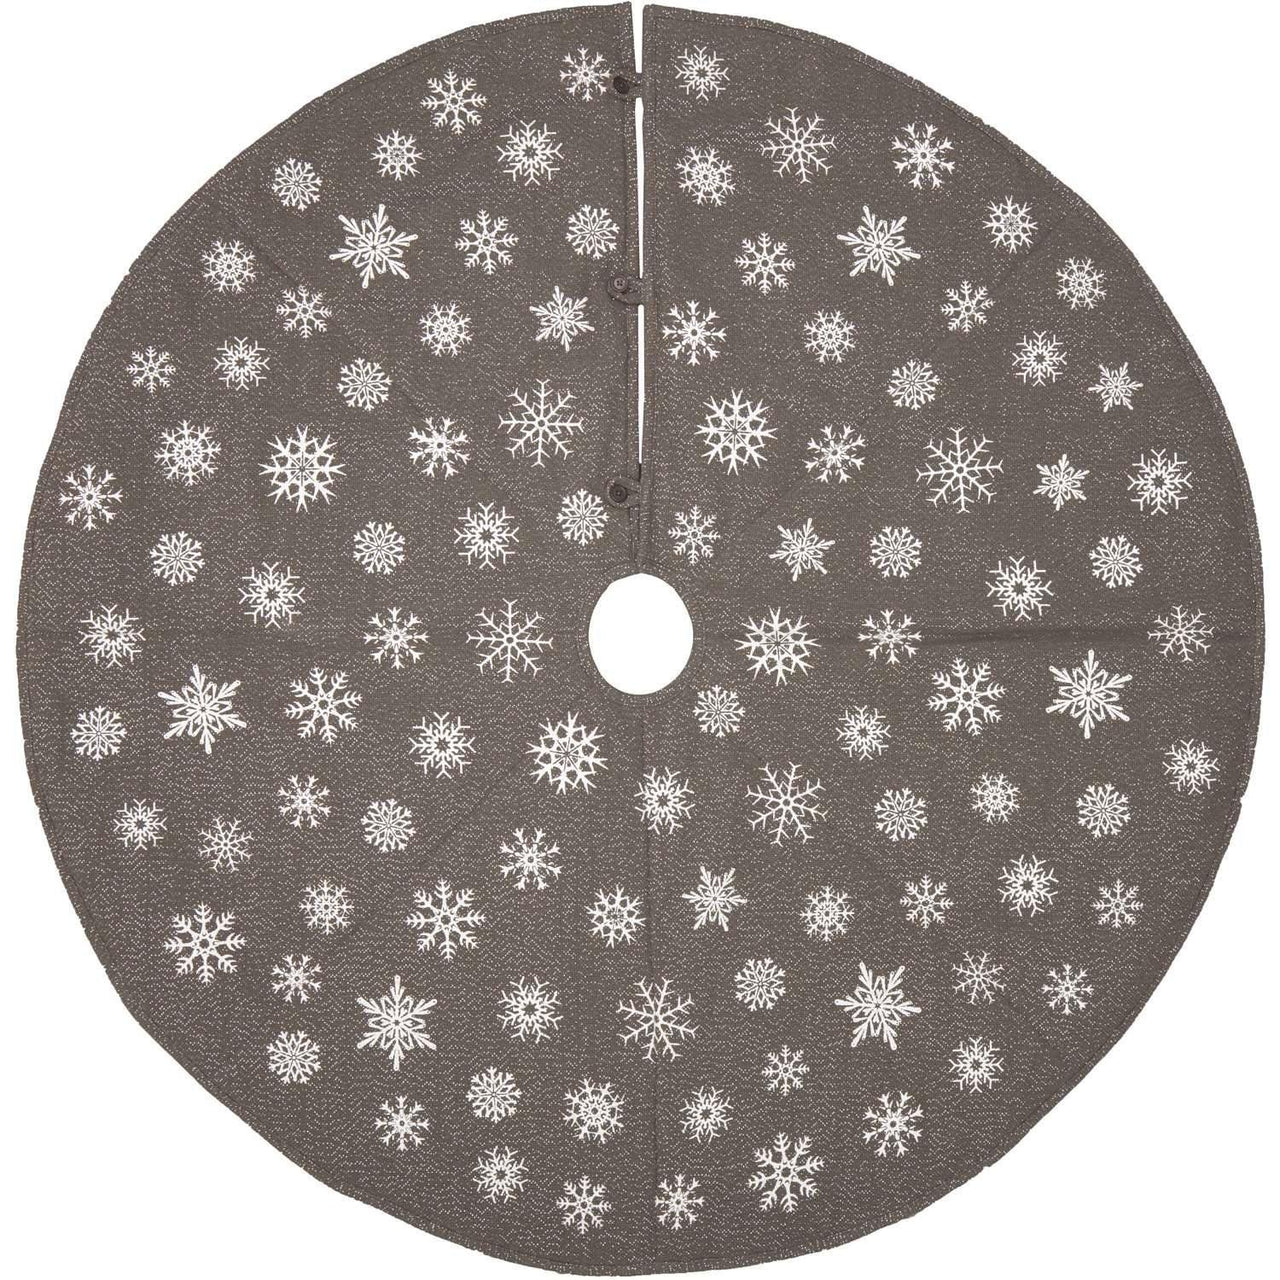 Snowflake Burlap Grey Christmas Tree Skirt 55 VHC Brands - The Fox Decor